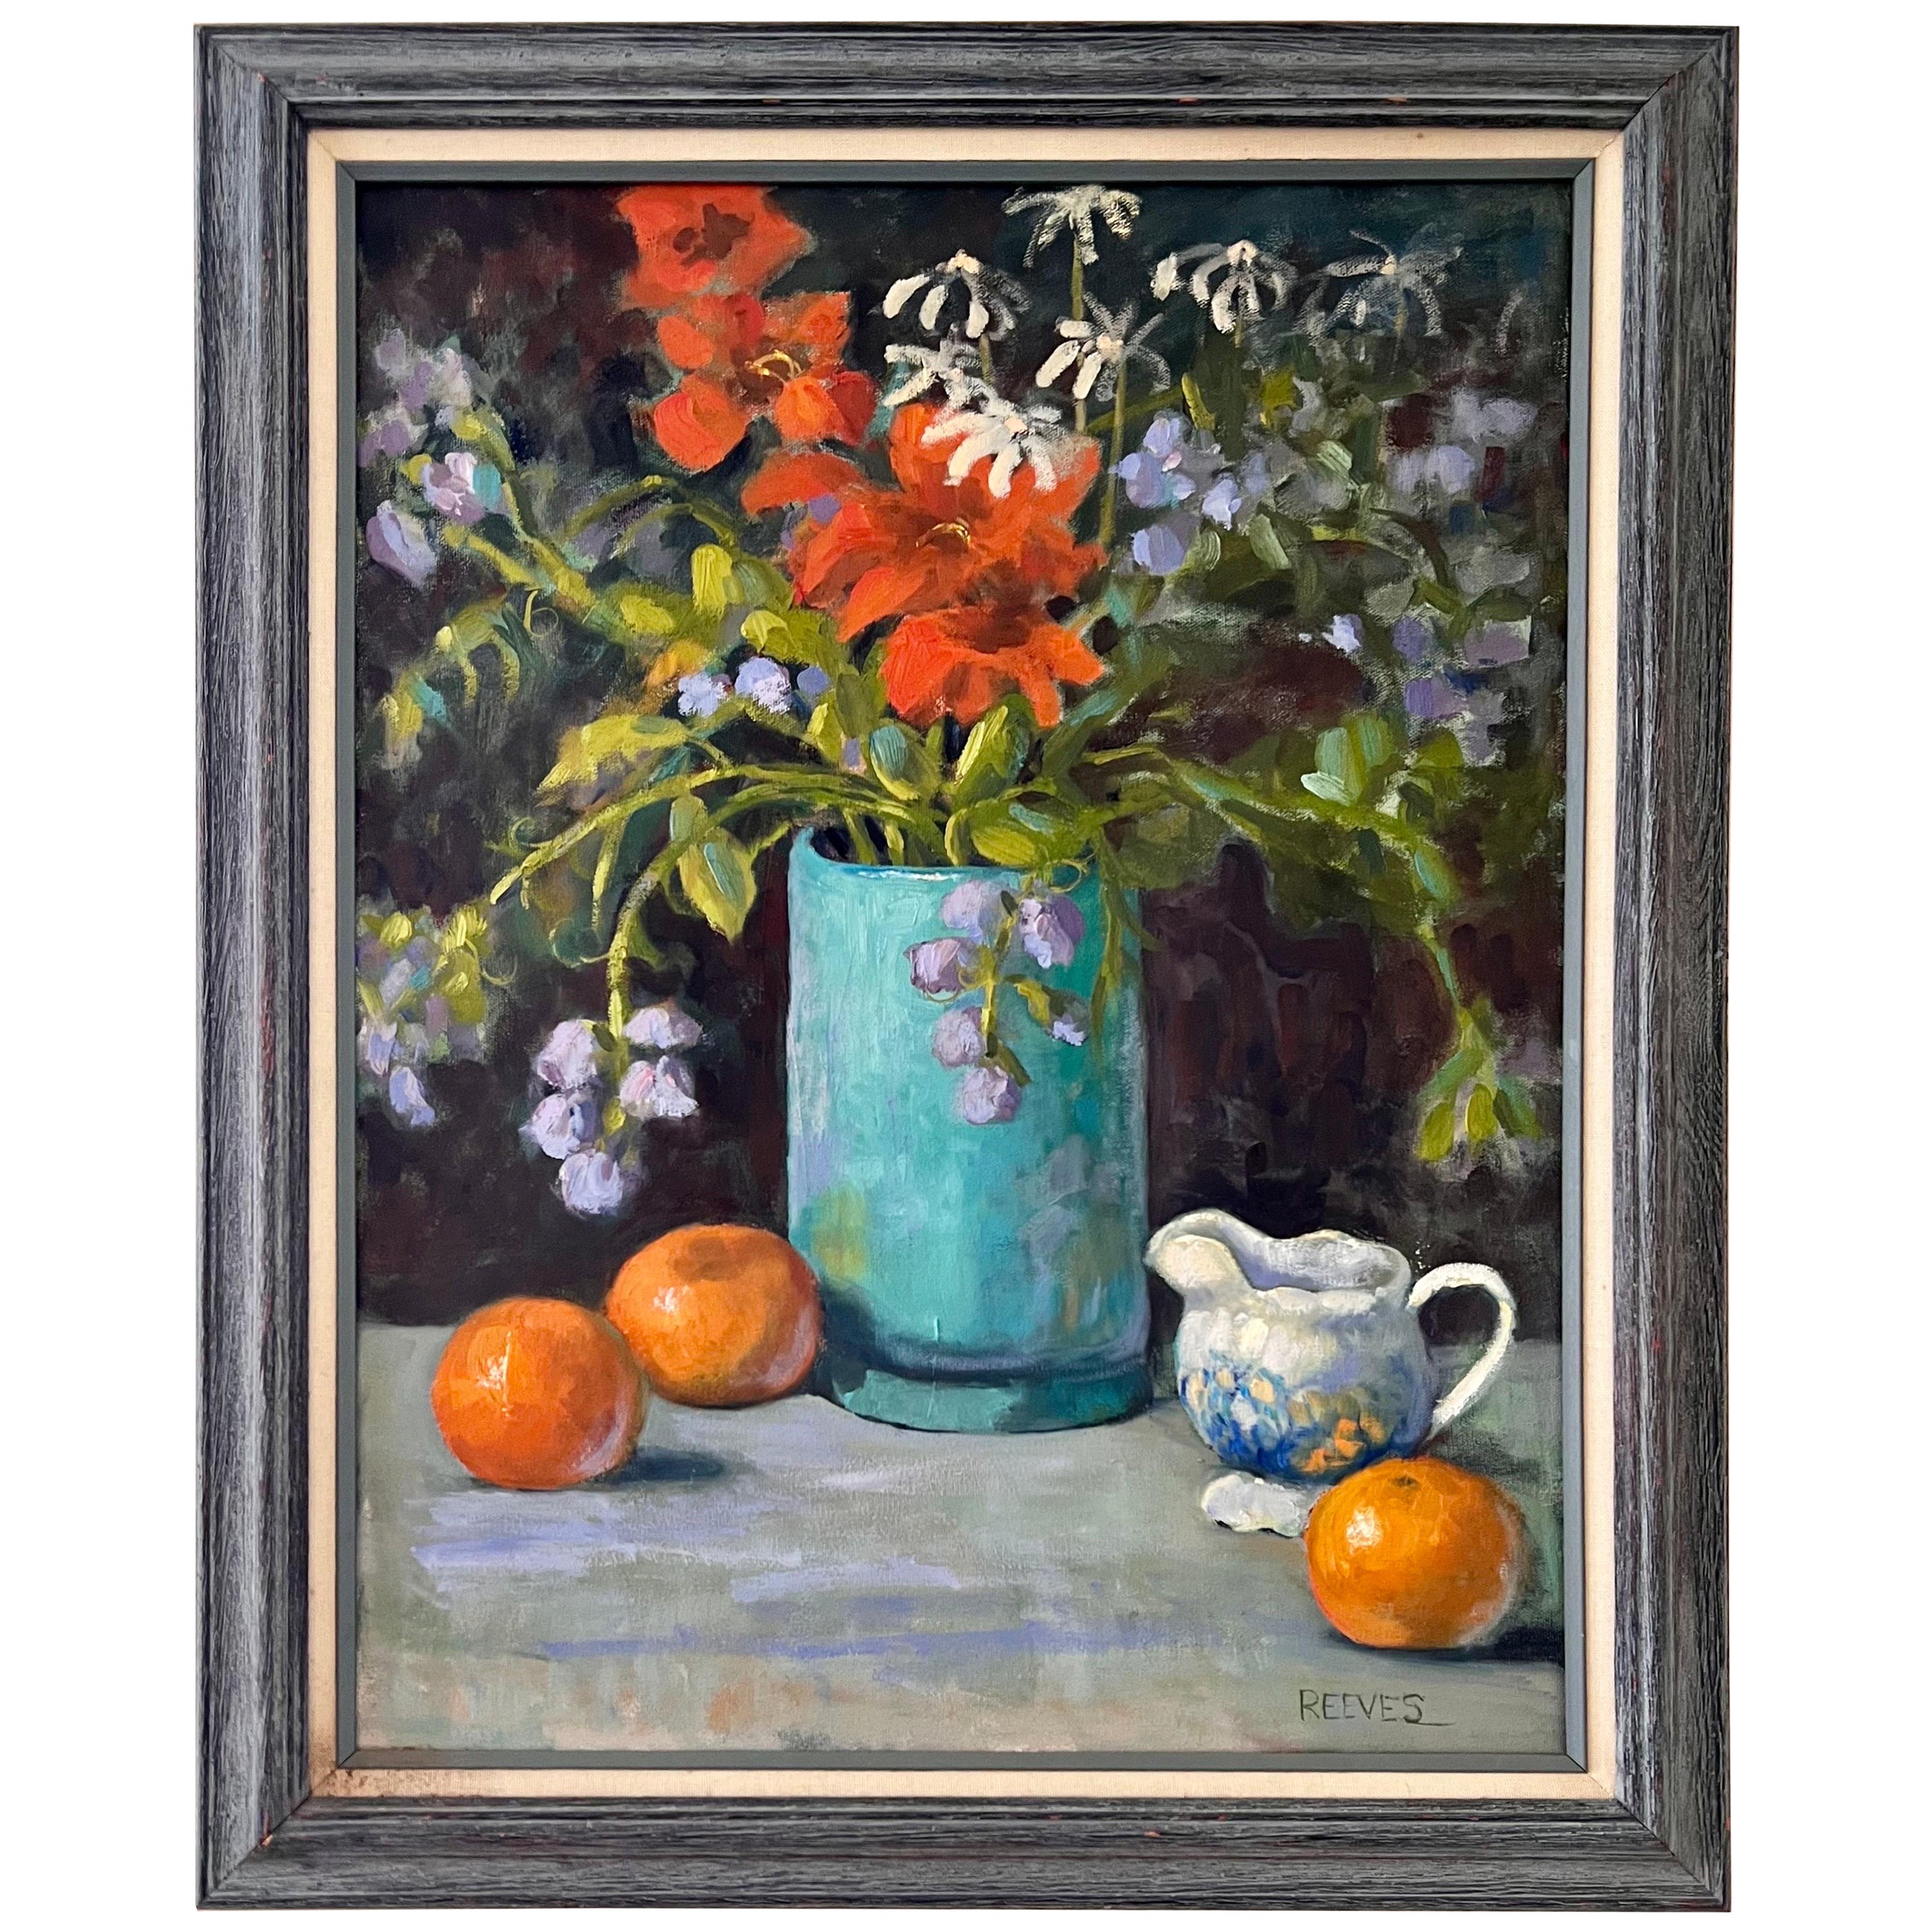 Original Signed Carol Reeves Vintage Still Life Painting Oranges & Flowers For Sale